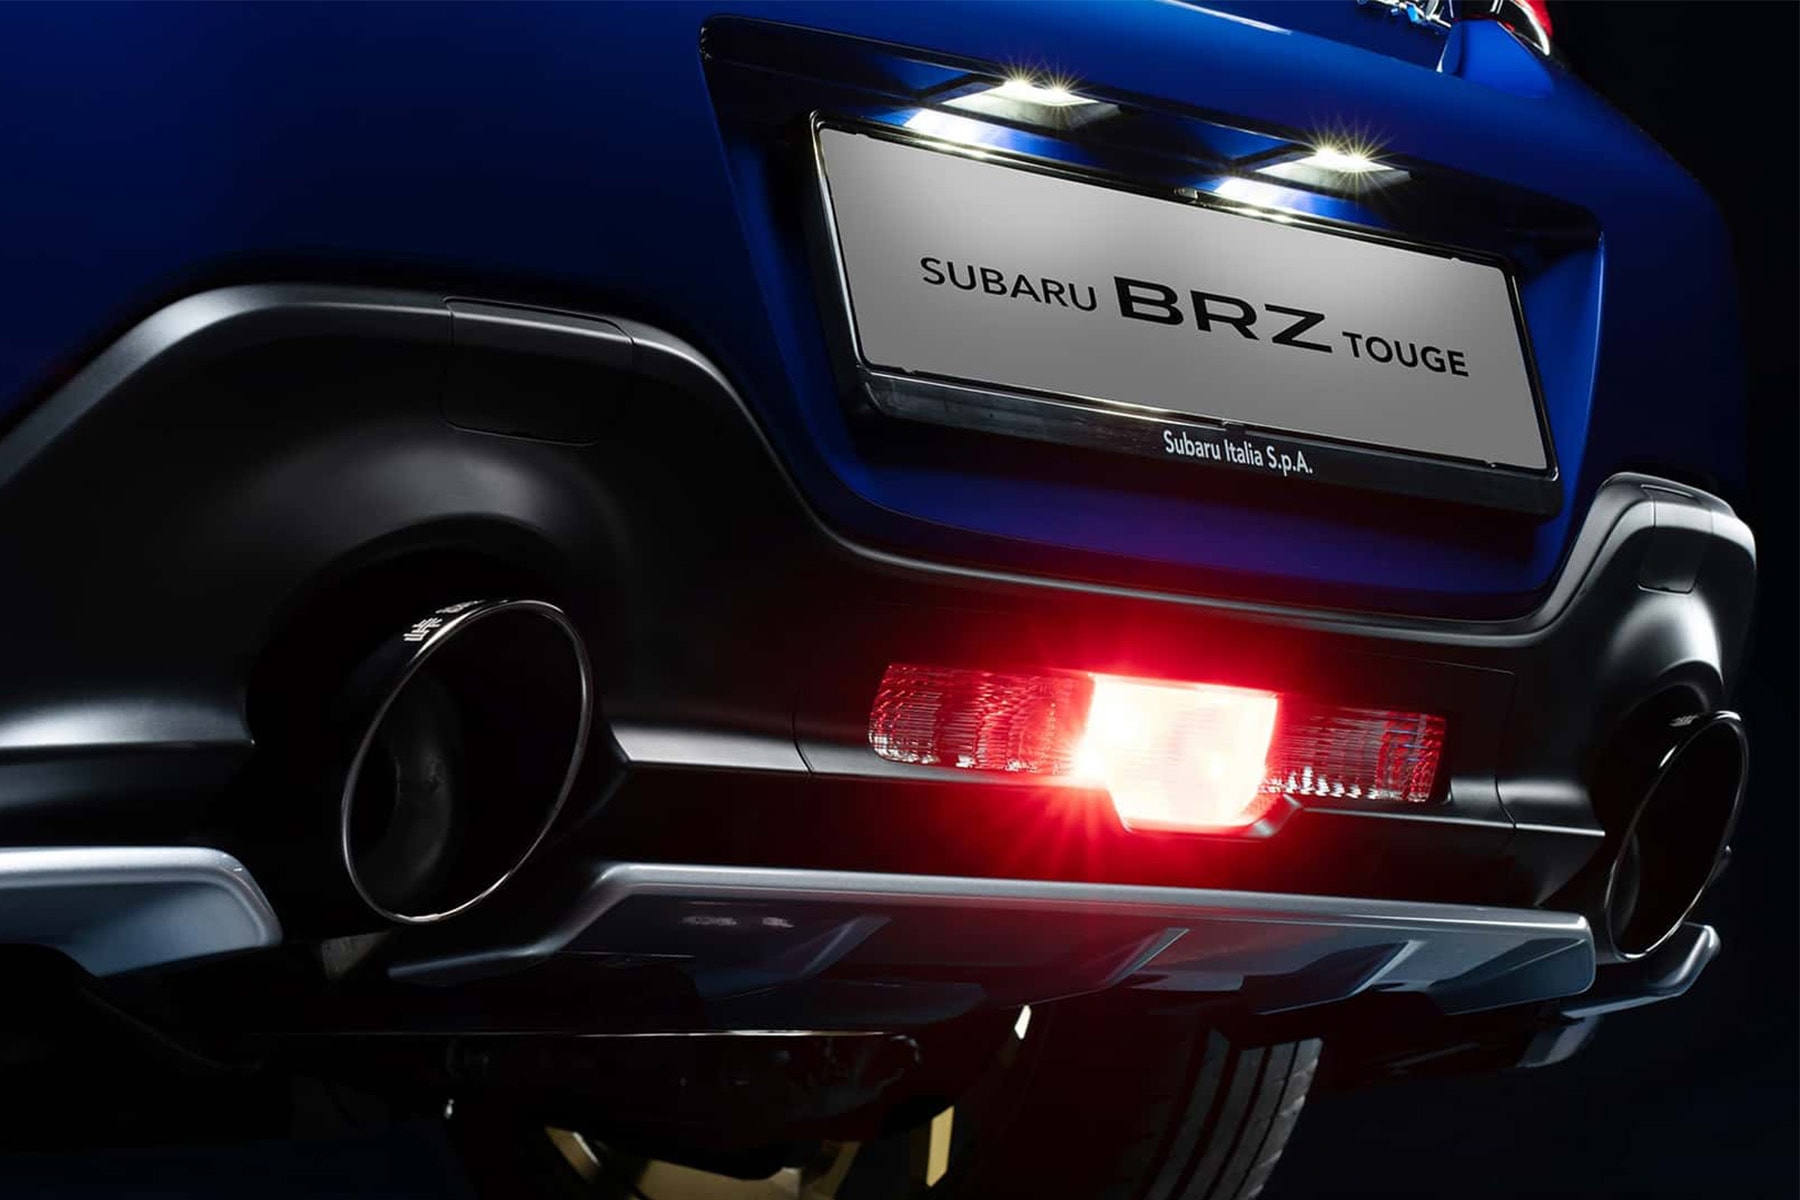 Subaru 正式發表全球限量 60 輛 BRZ Touge 特別版車型